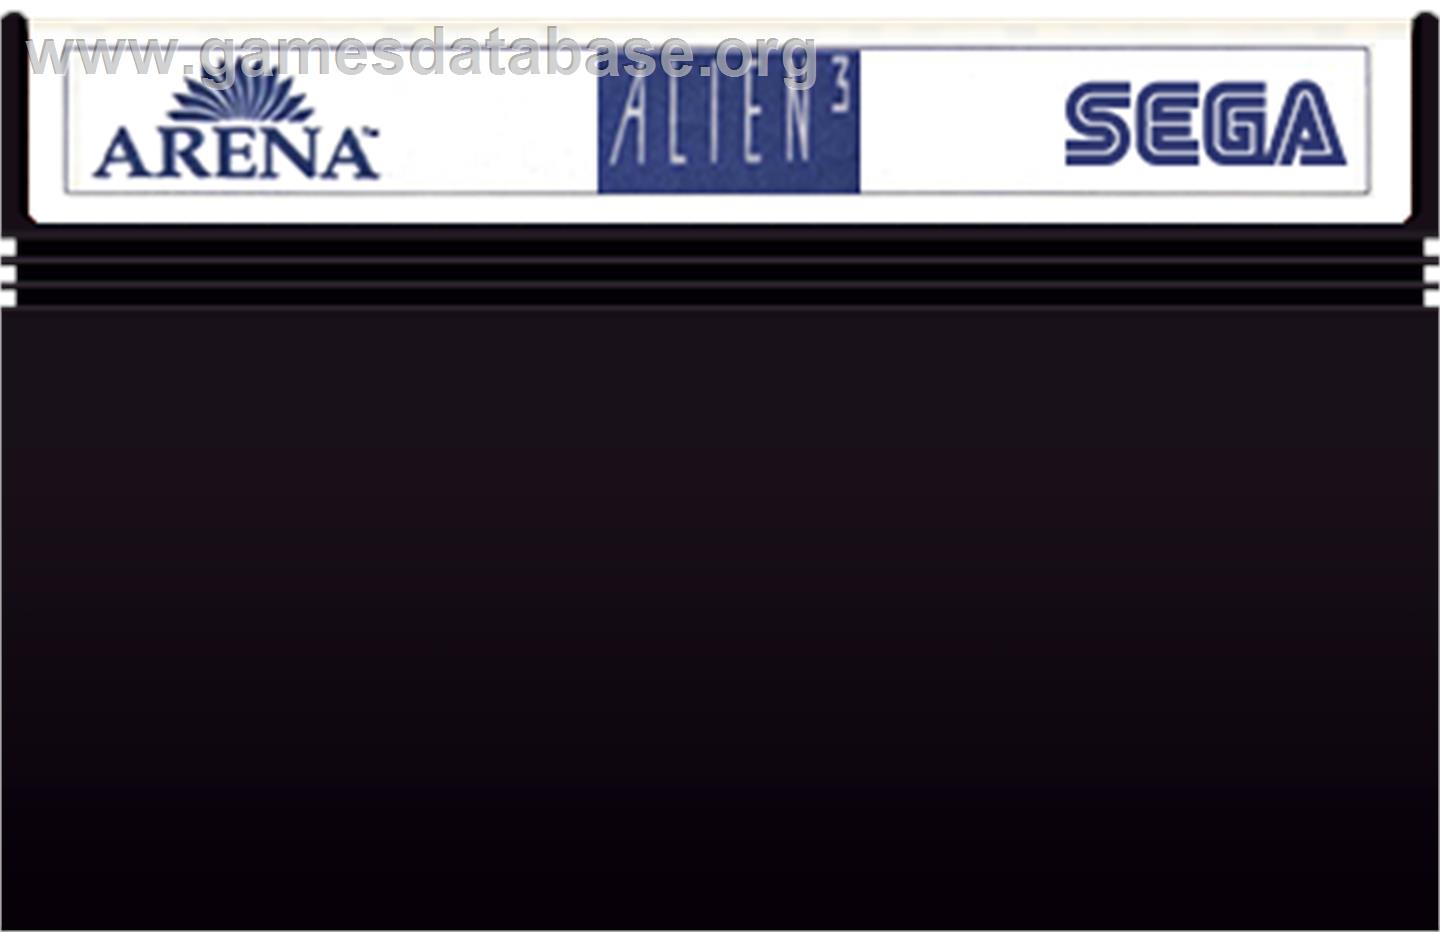 Alien³ - Sega Master System - Artwork - Cartridge